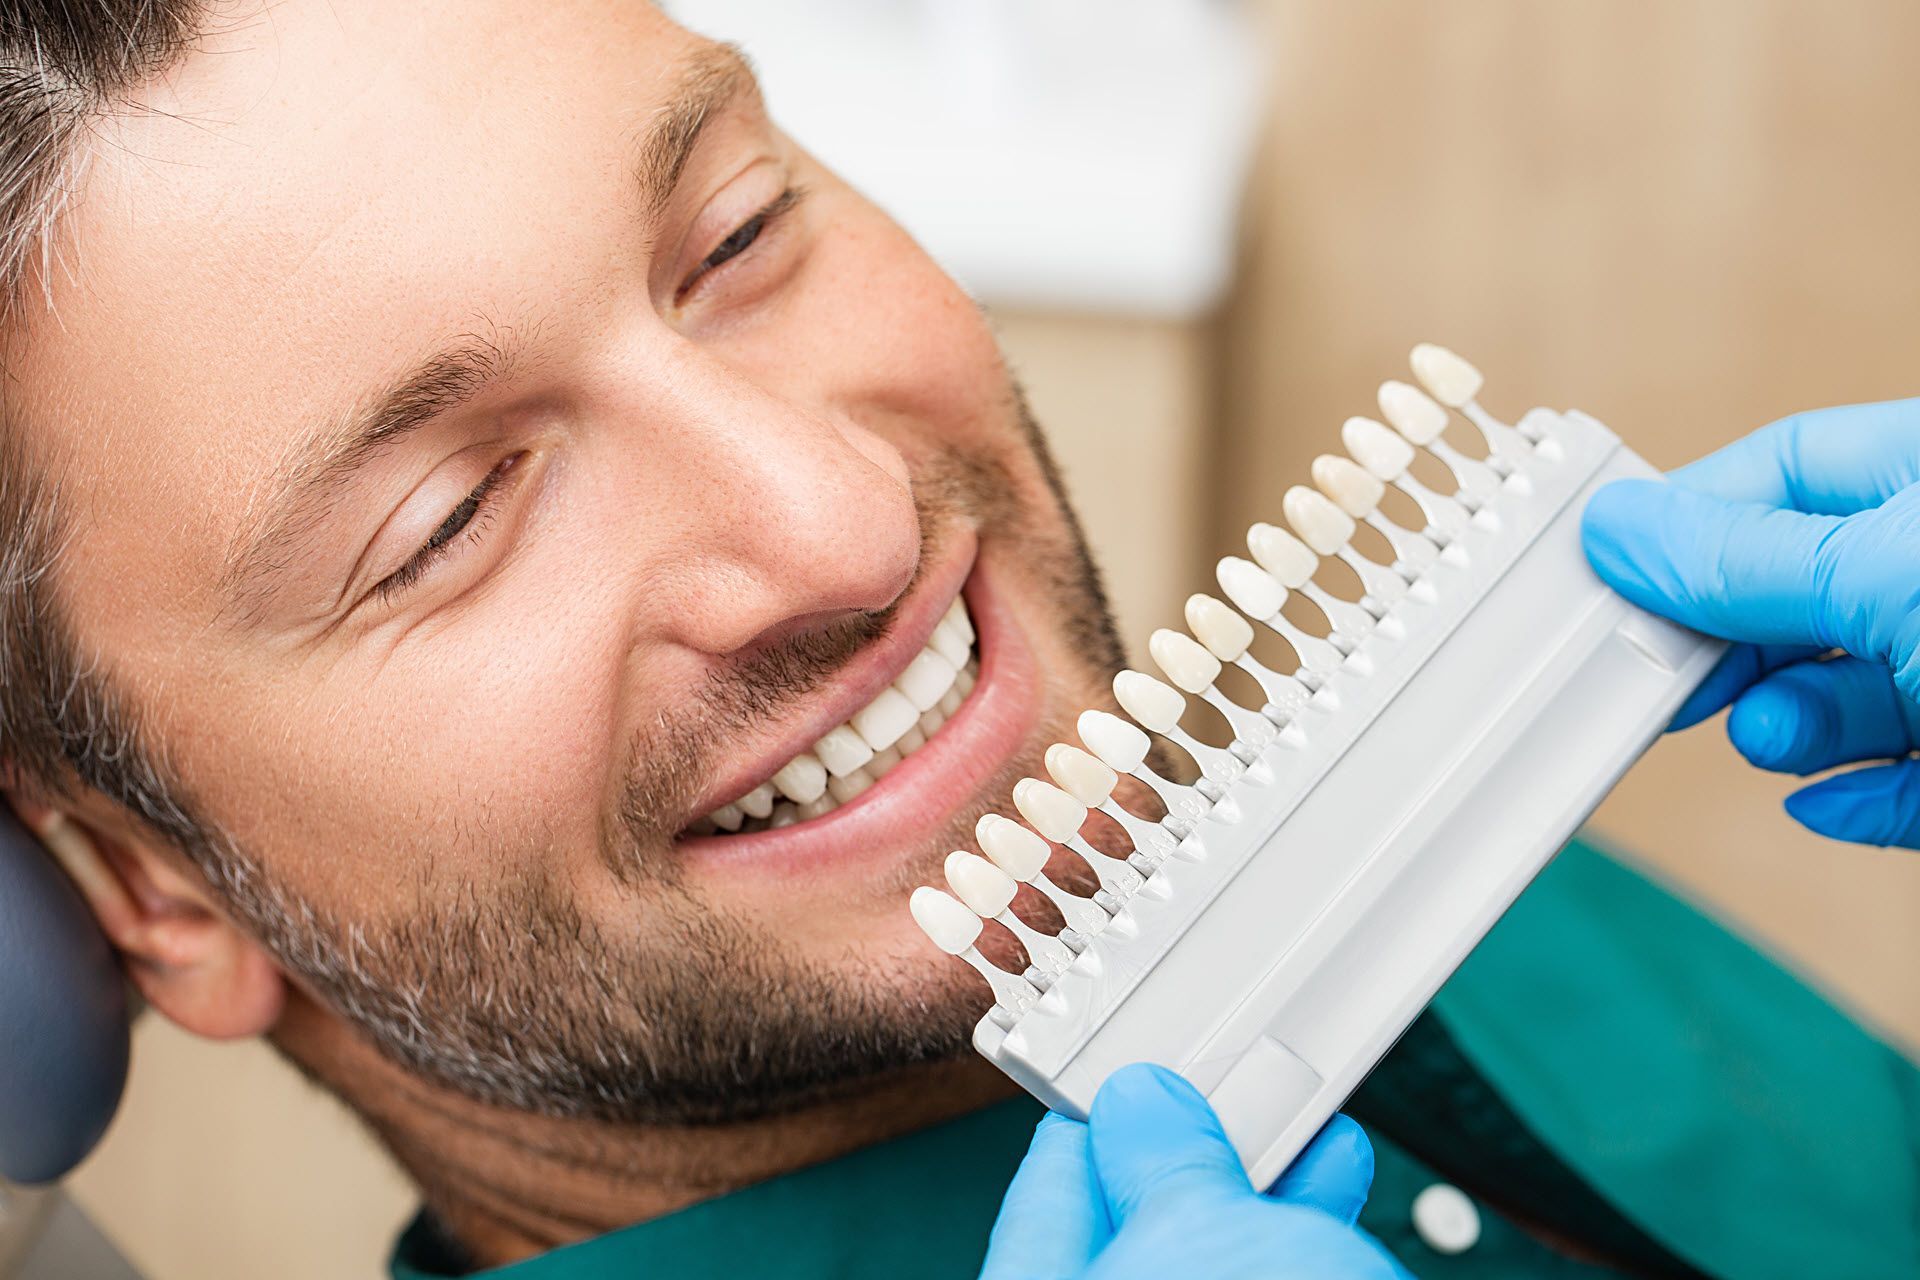 Benefits of Root Canal Treatment Artin dental Toronto